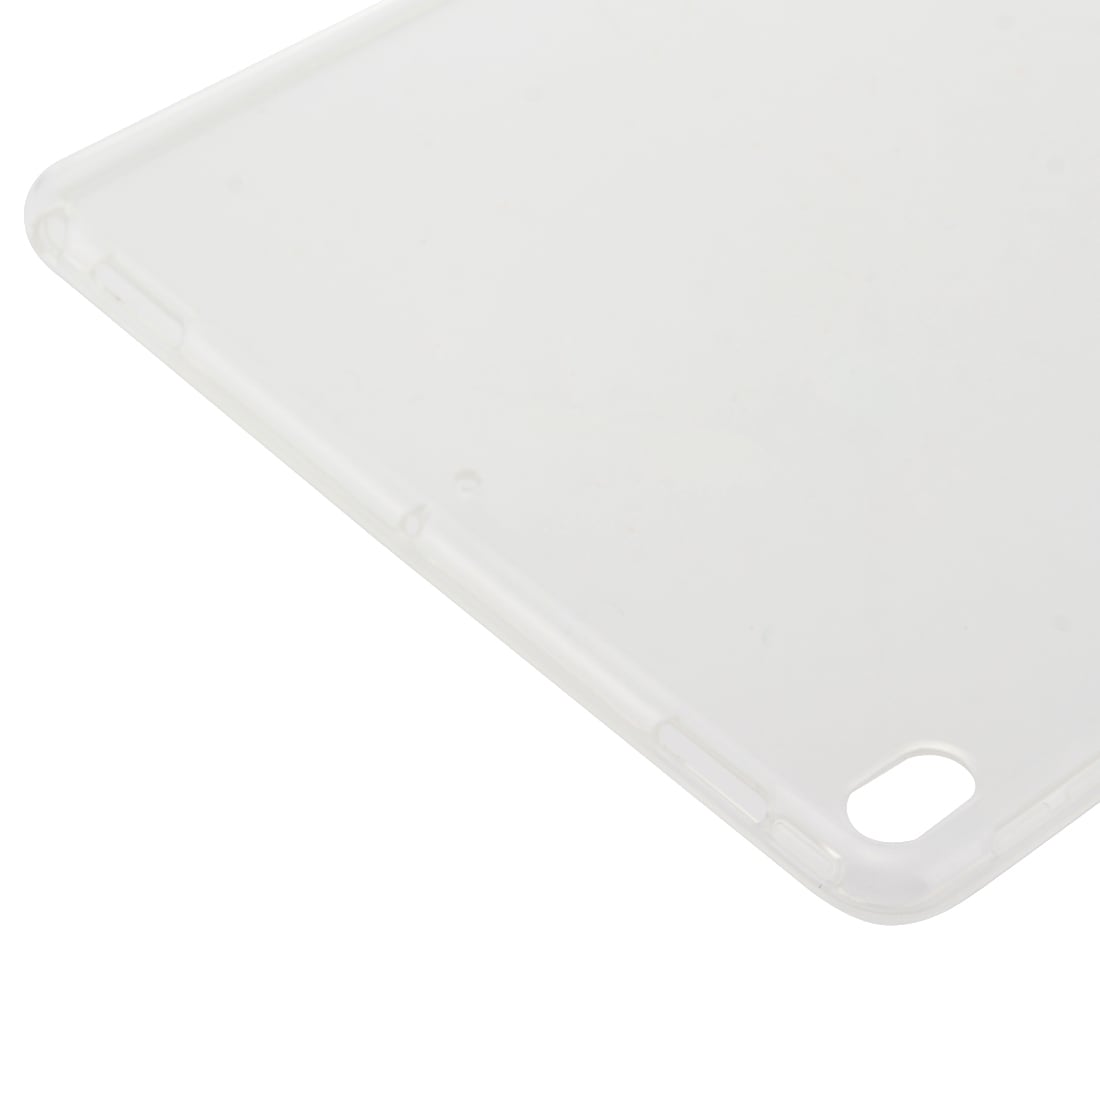 Cover iPad Pro 10.5